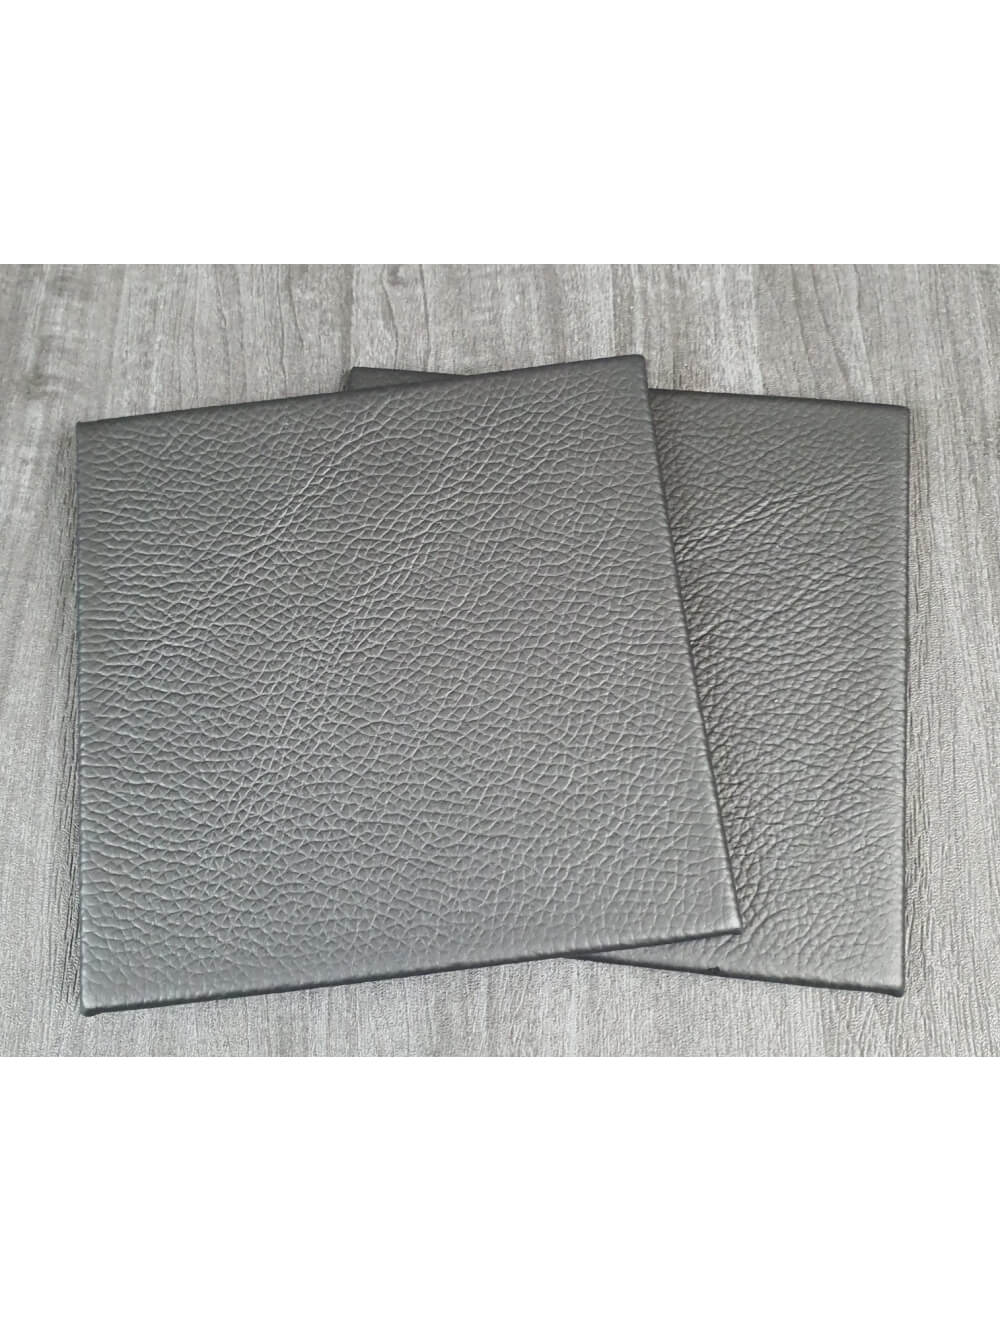 Black Shelly Leather Coaster- 10cm Sq (sale item)